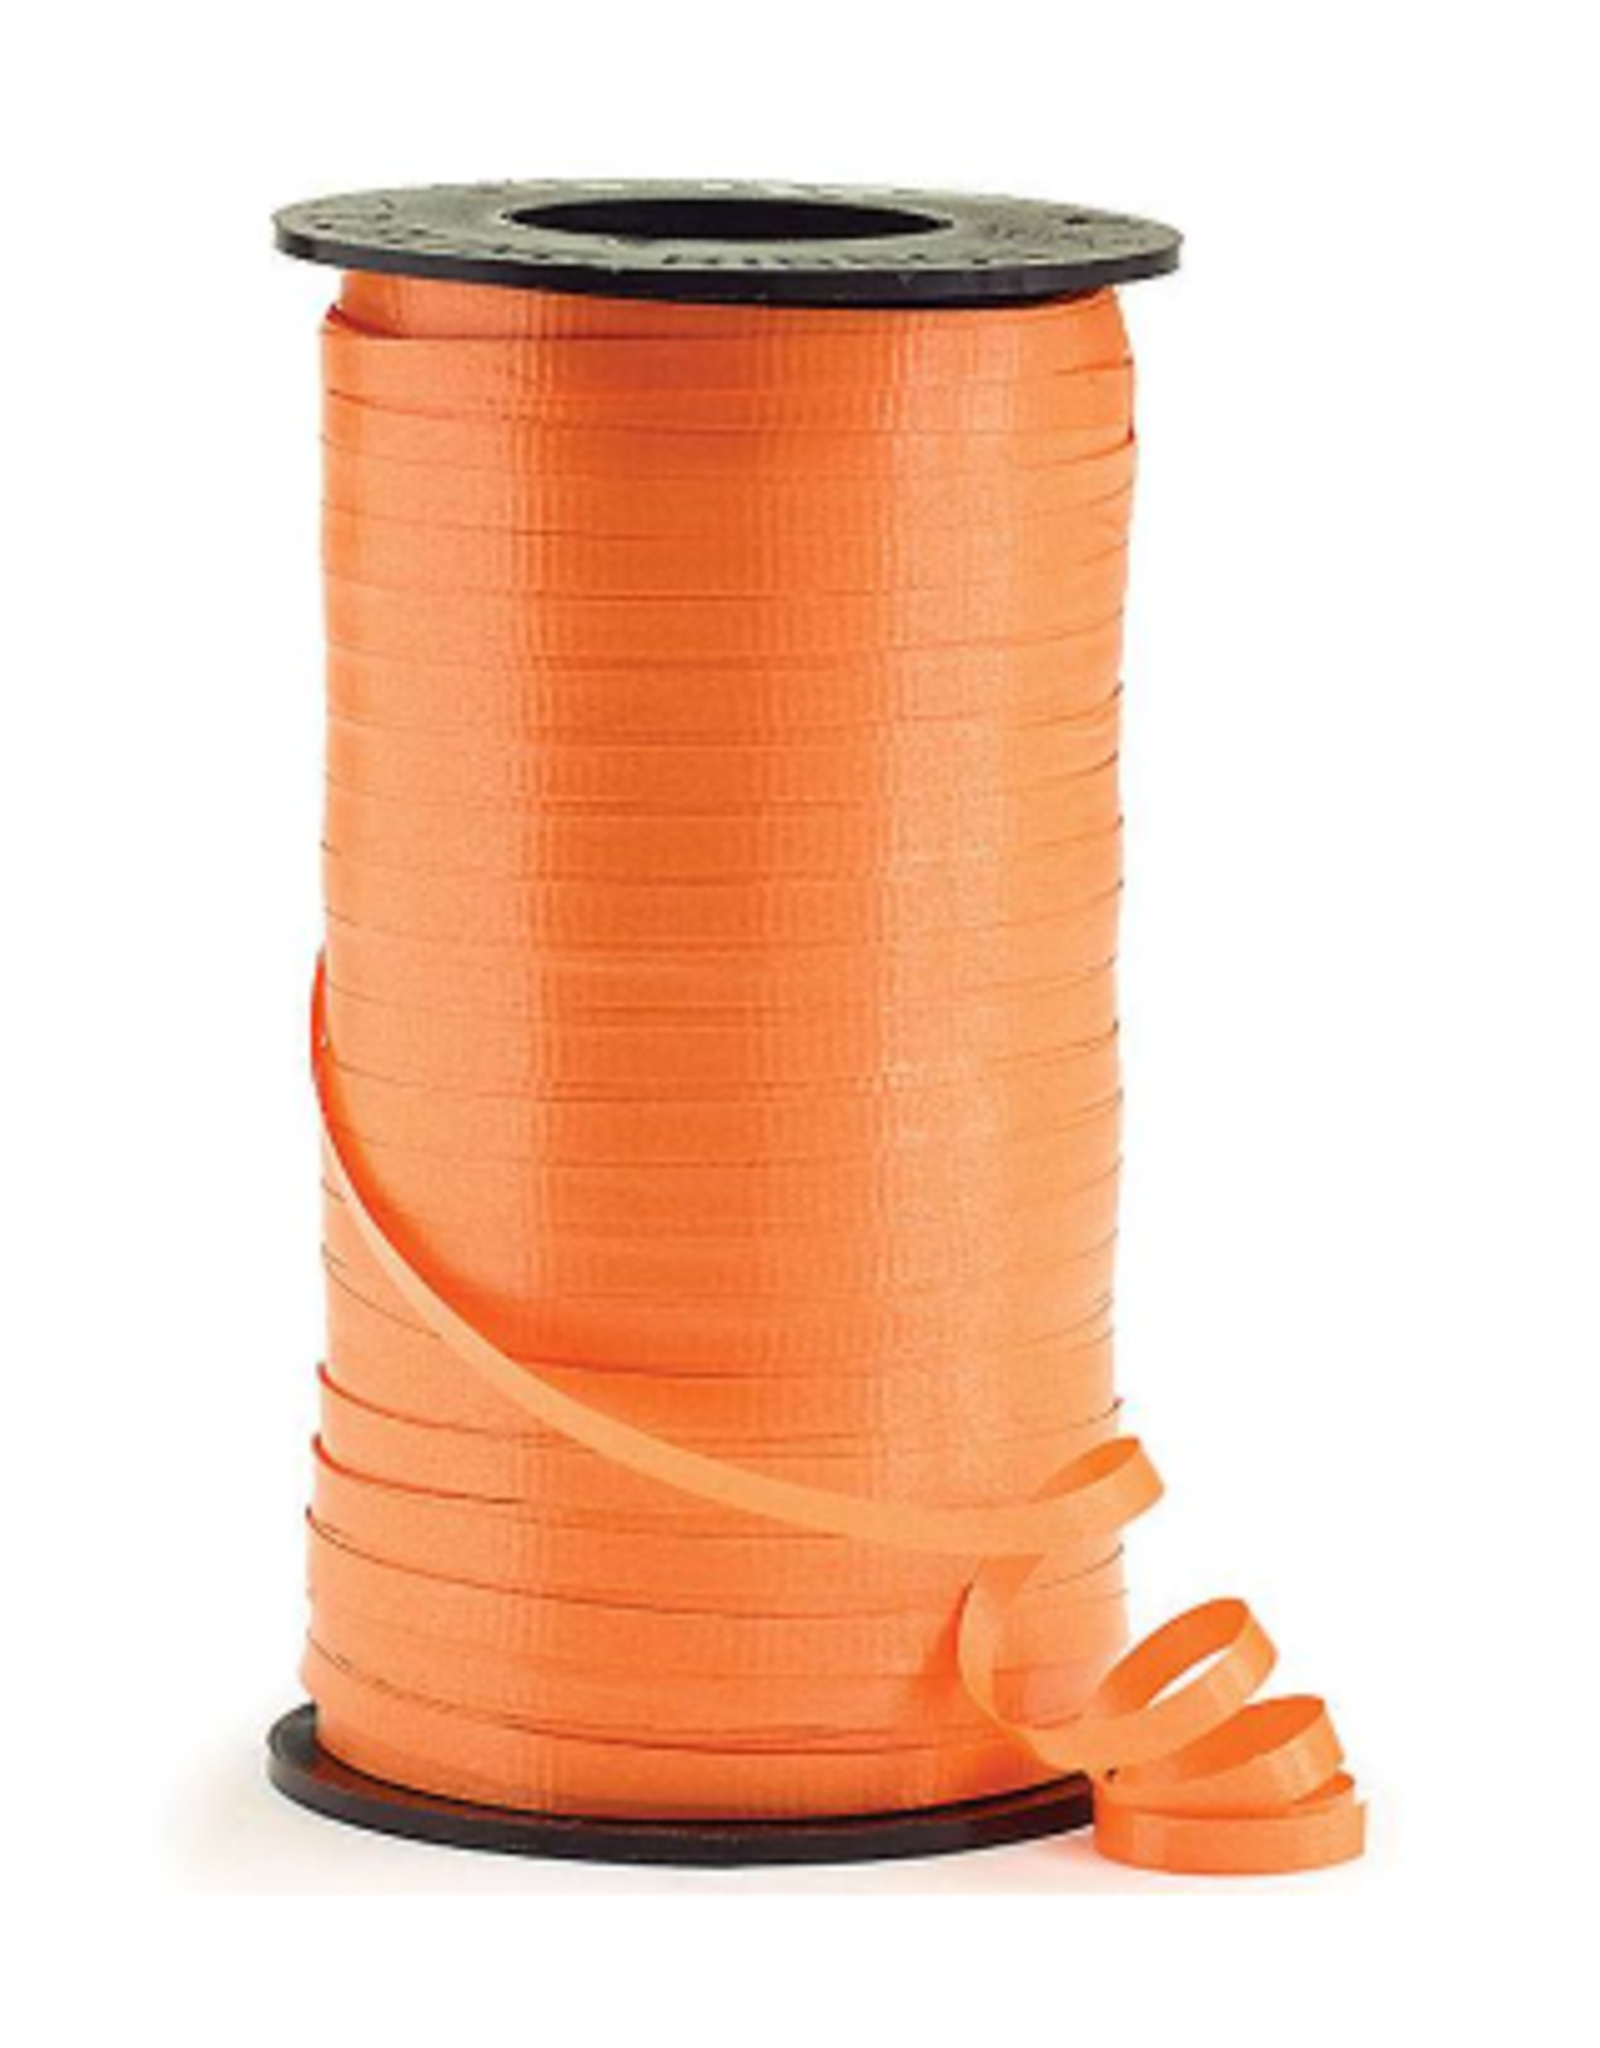 Berwick Curling Ribbon: 3/16"X500 YARDS- Orange